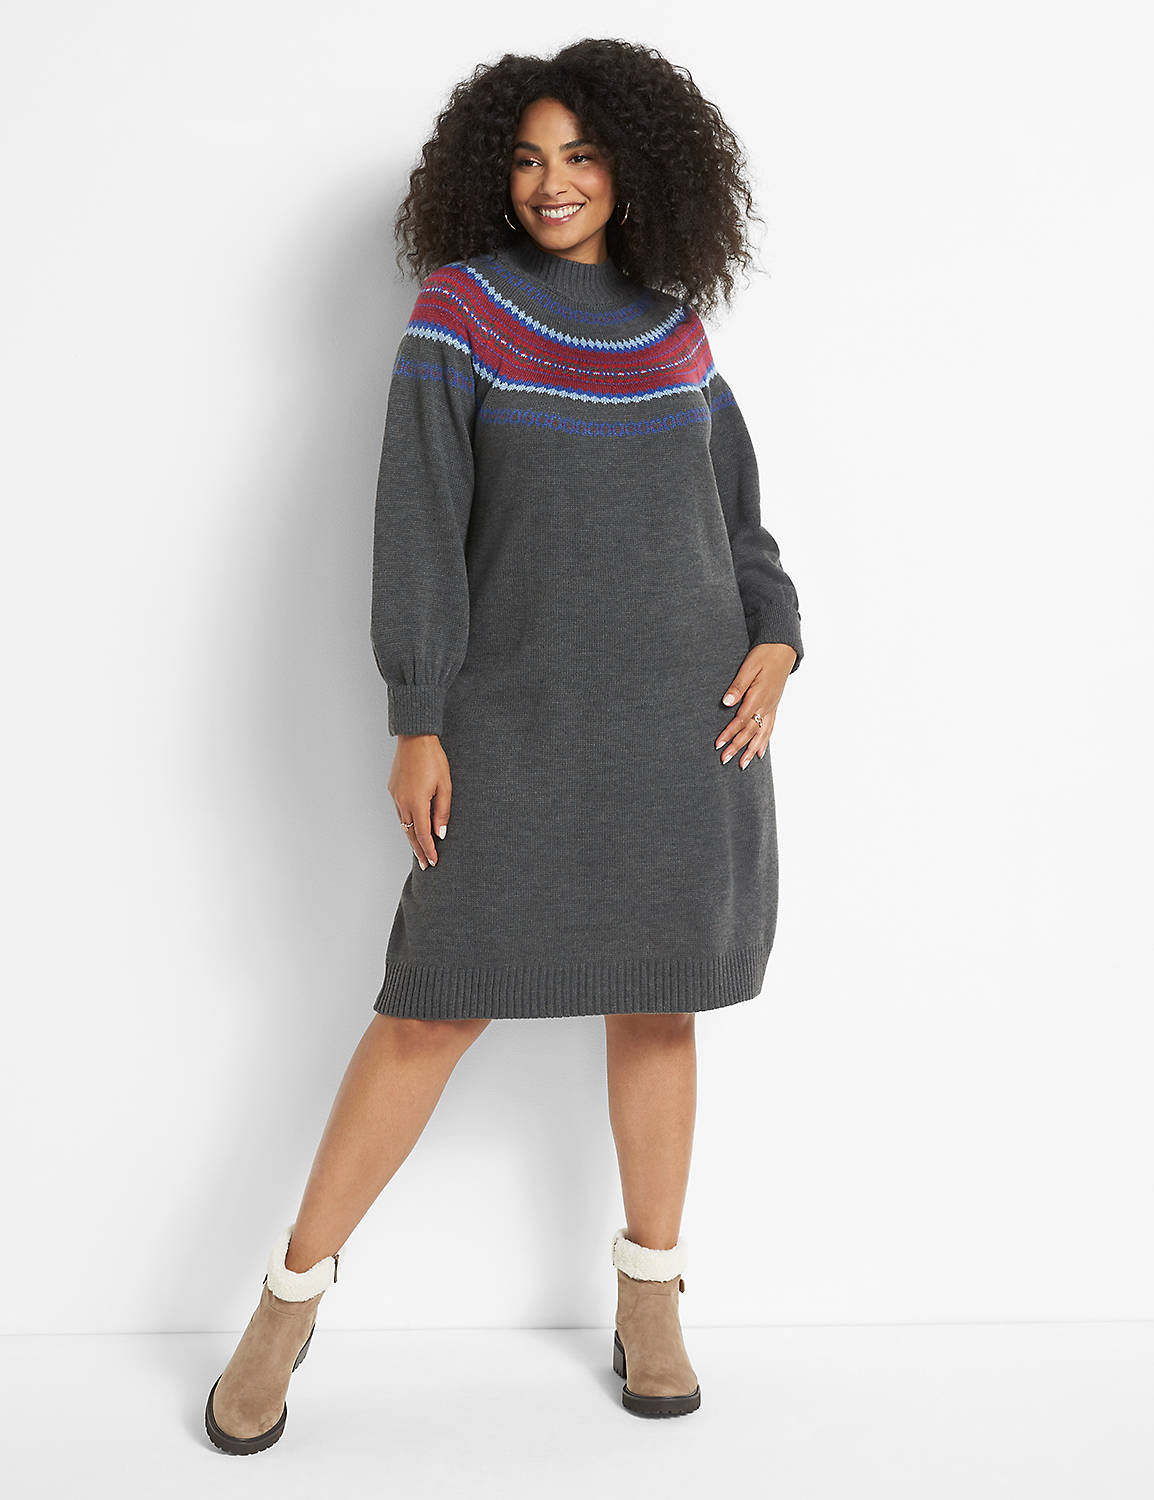 Long Sleeve Turtleneck Fairisle Sweater Dress 1124678:B65 Dark Heather Grey:18/20 Product Image 1